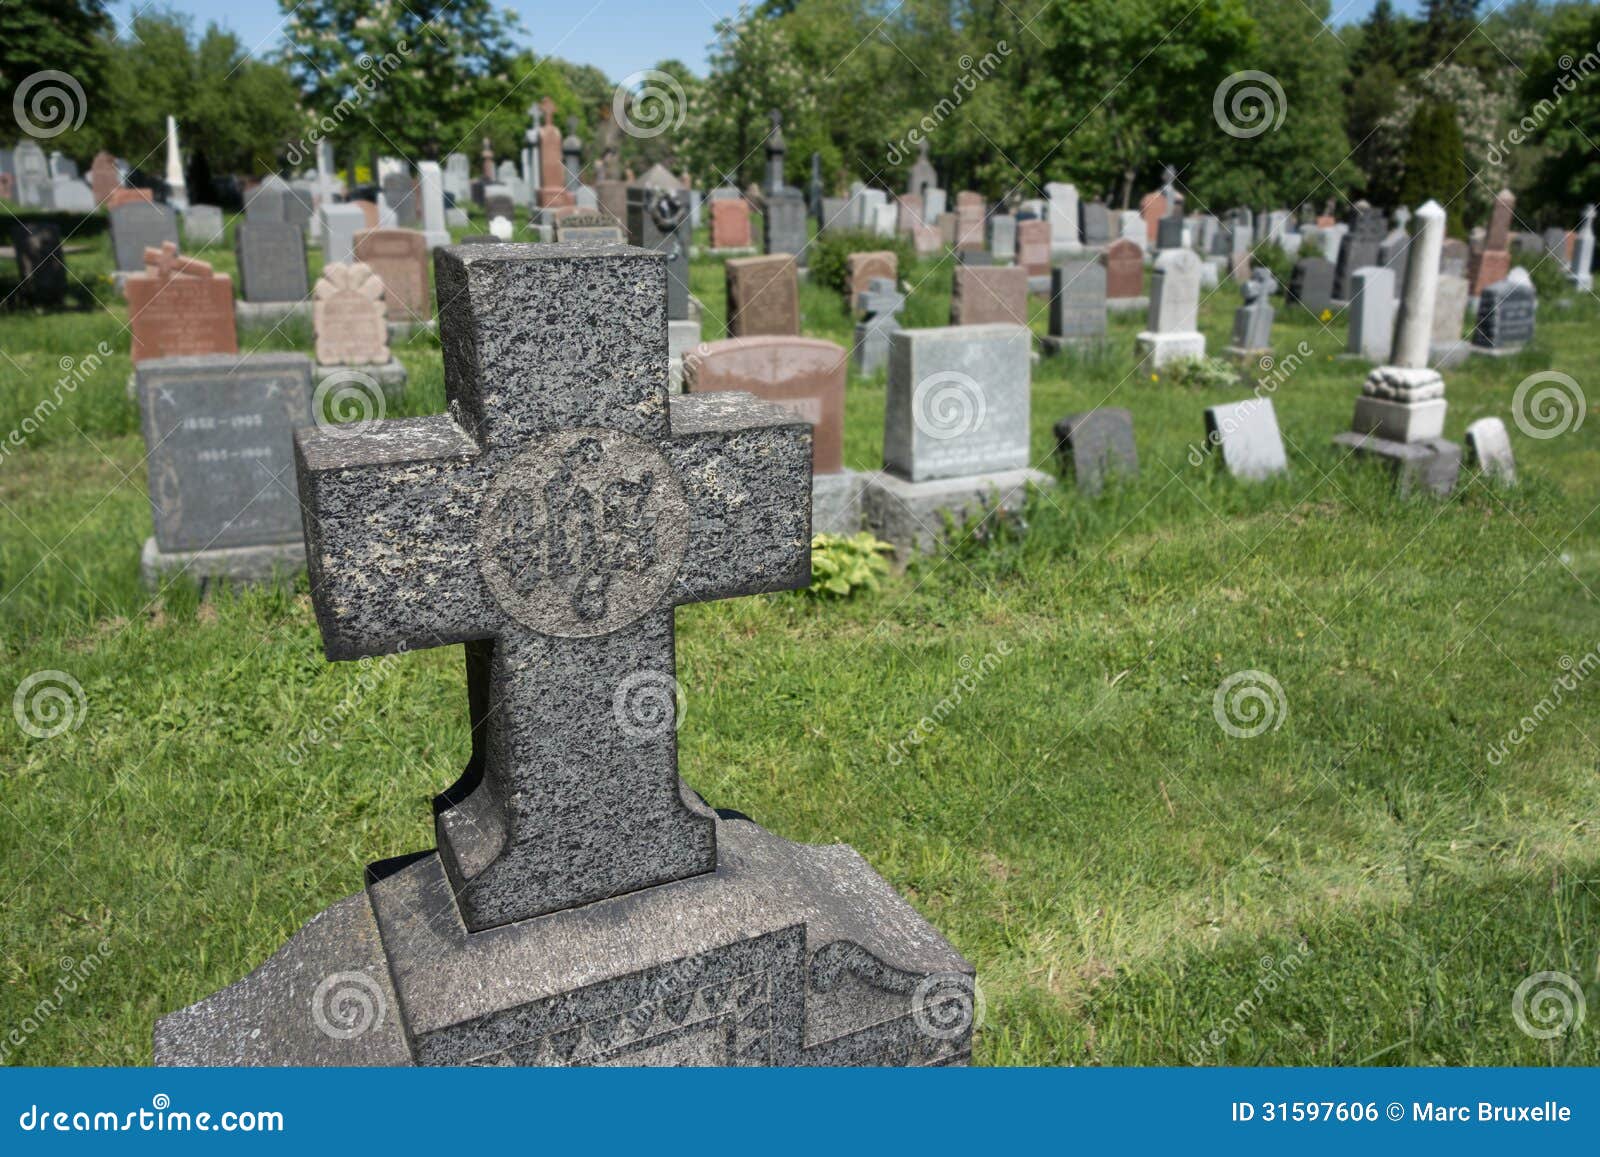 Cemetary stone cross stock photo. Image of grey, cemetery - 31597606